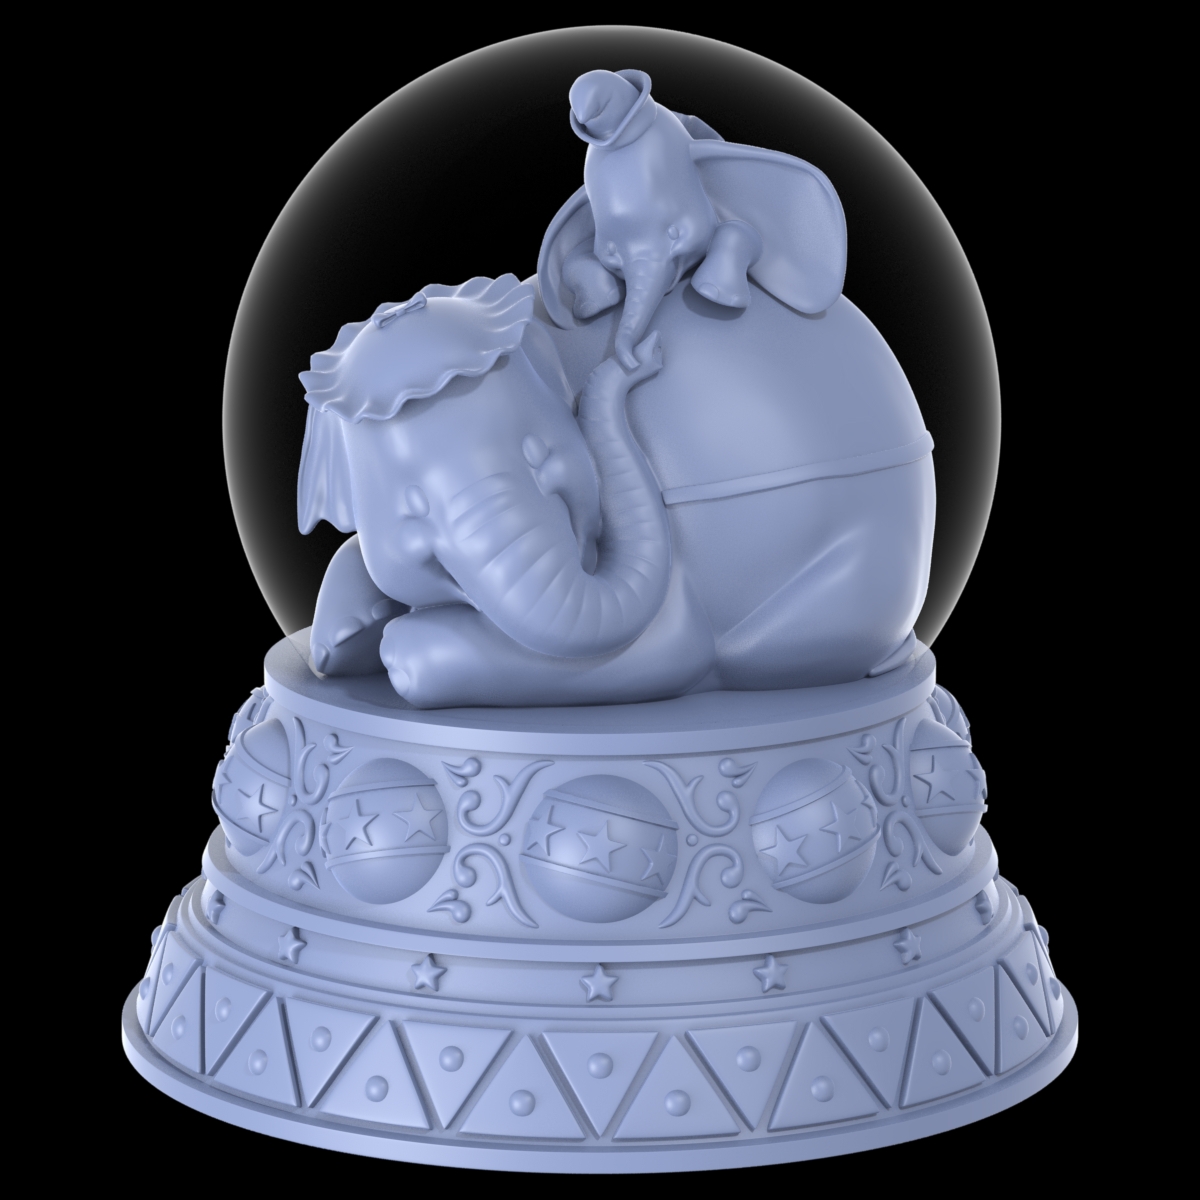 disney snow globes sculpture Dumbo Pooh mickey mouse digital sculpture